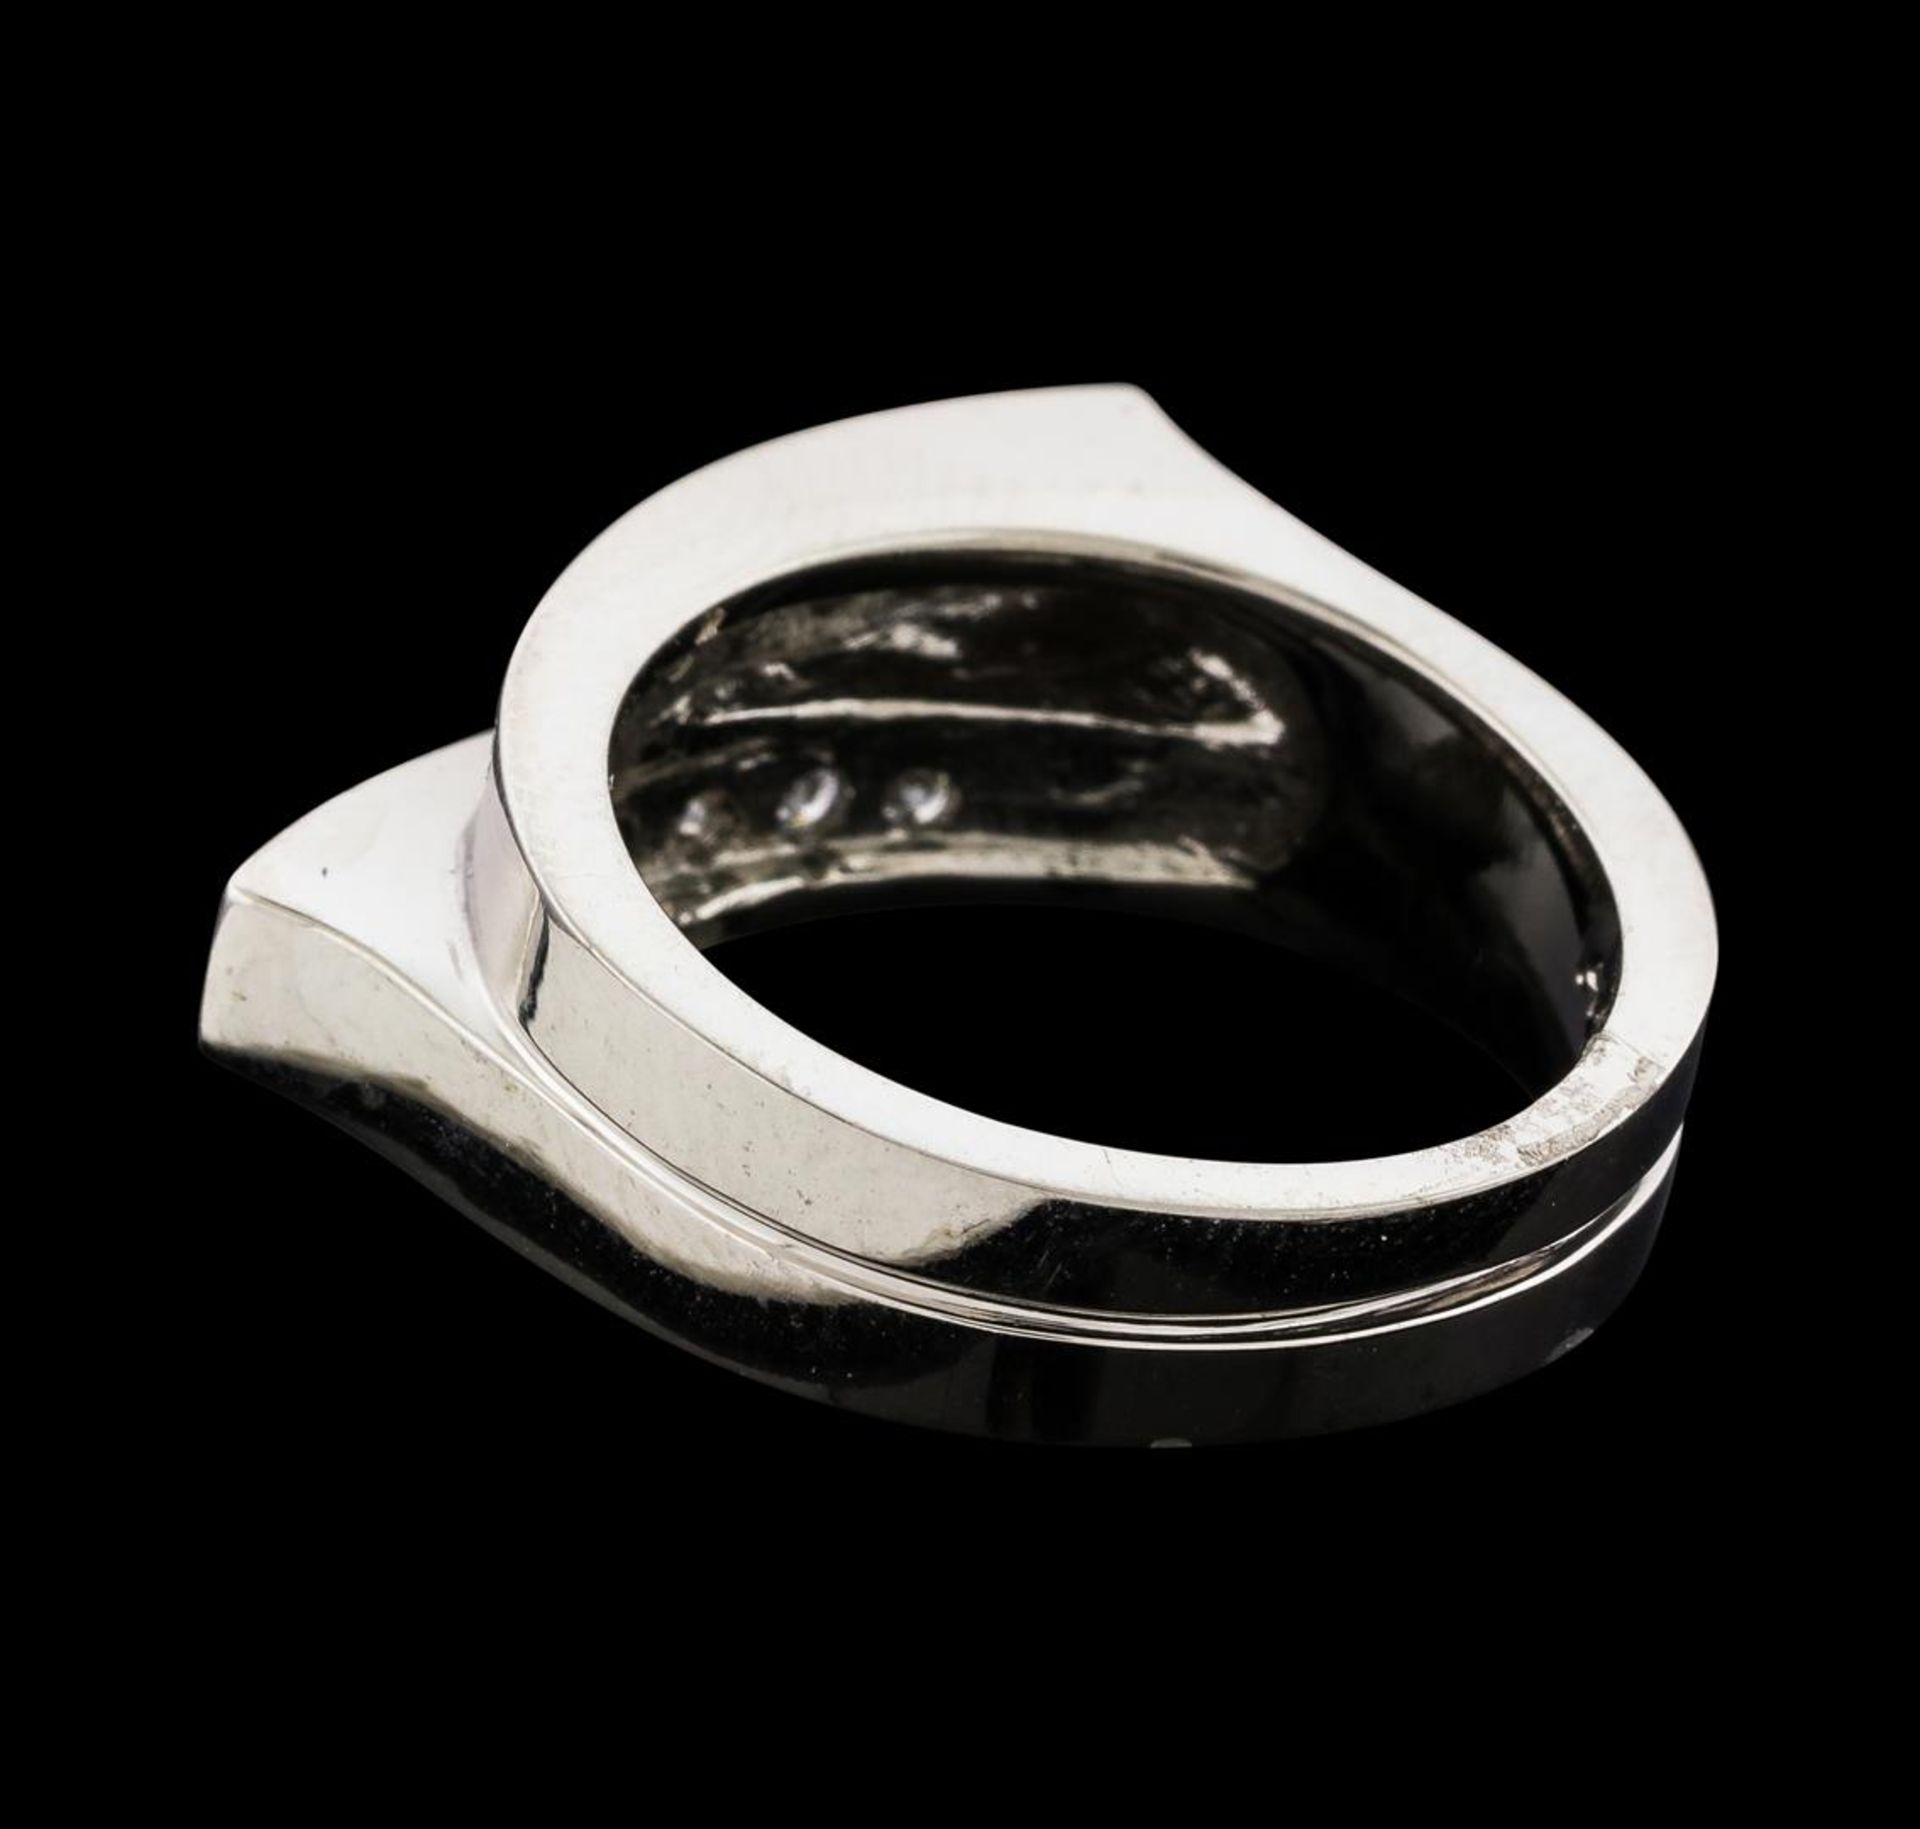 0.44 ctw Diamond Ring - 14KT White Gold - Image 3 of 4